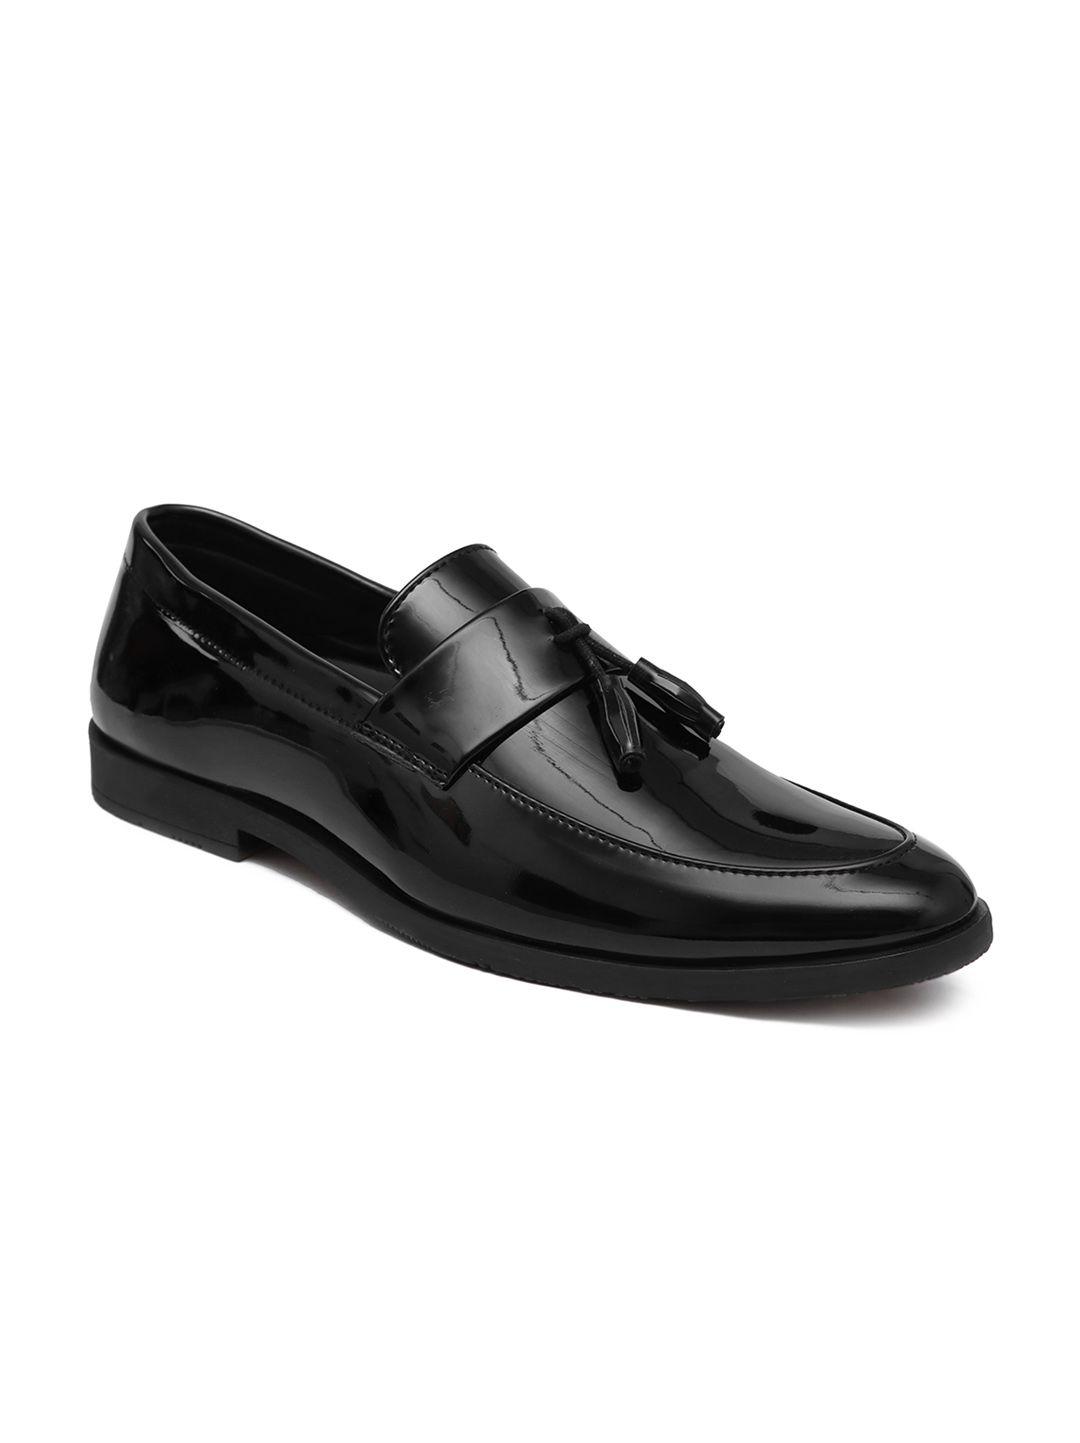 birgos men leather formal slip on shoes